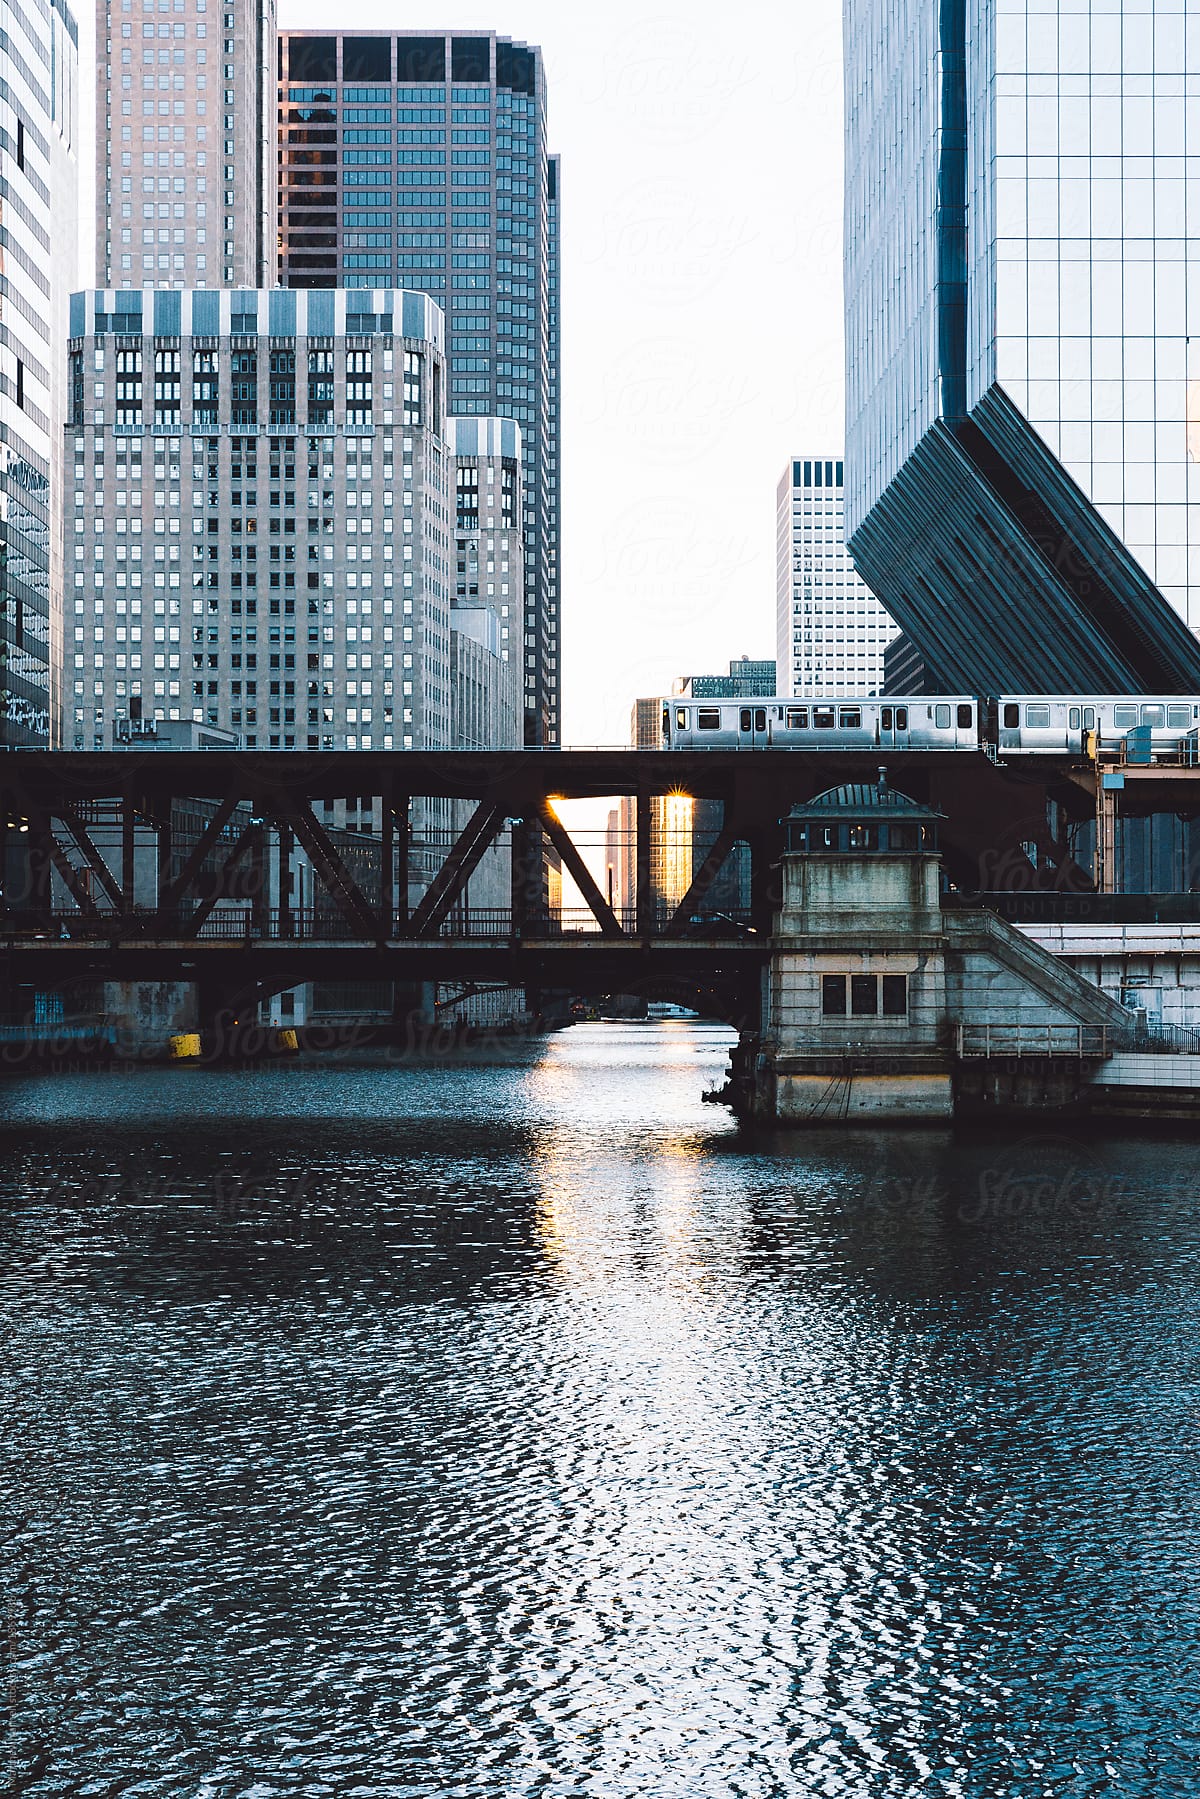 Bridge over the Chicago river.